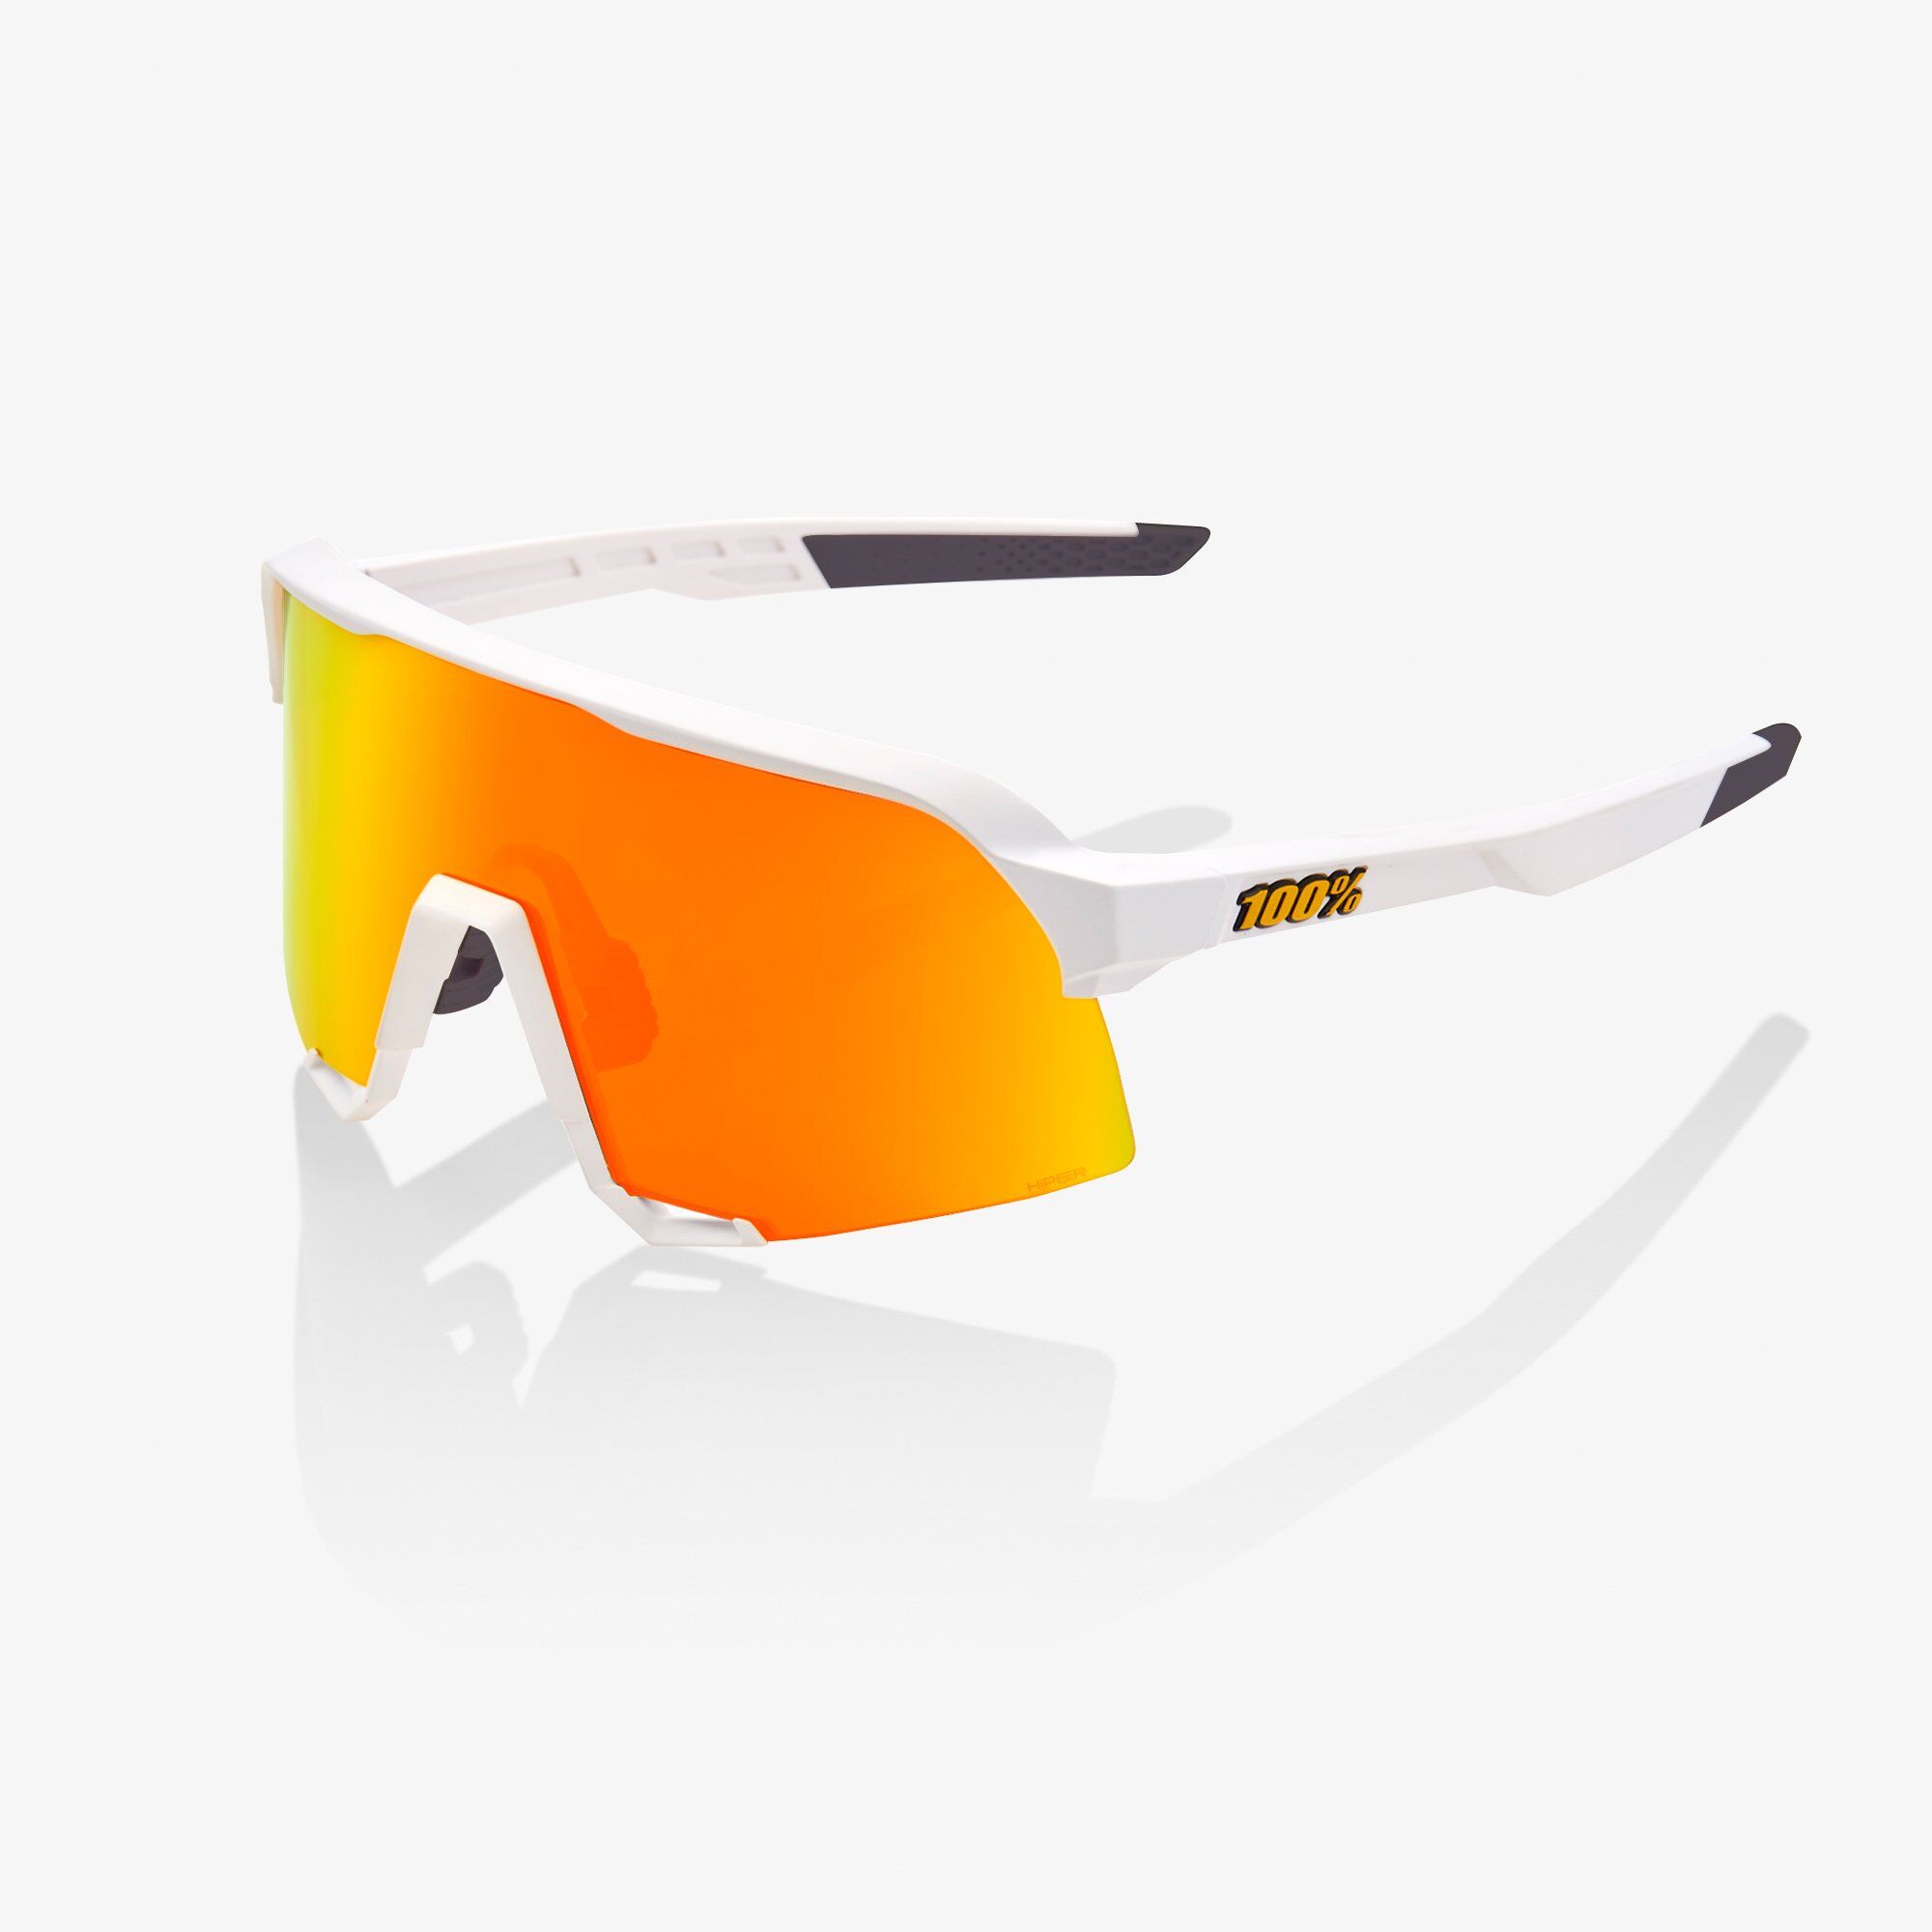 100% S3 - Sunglasses